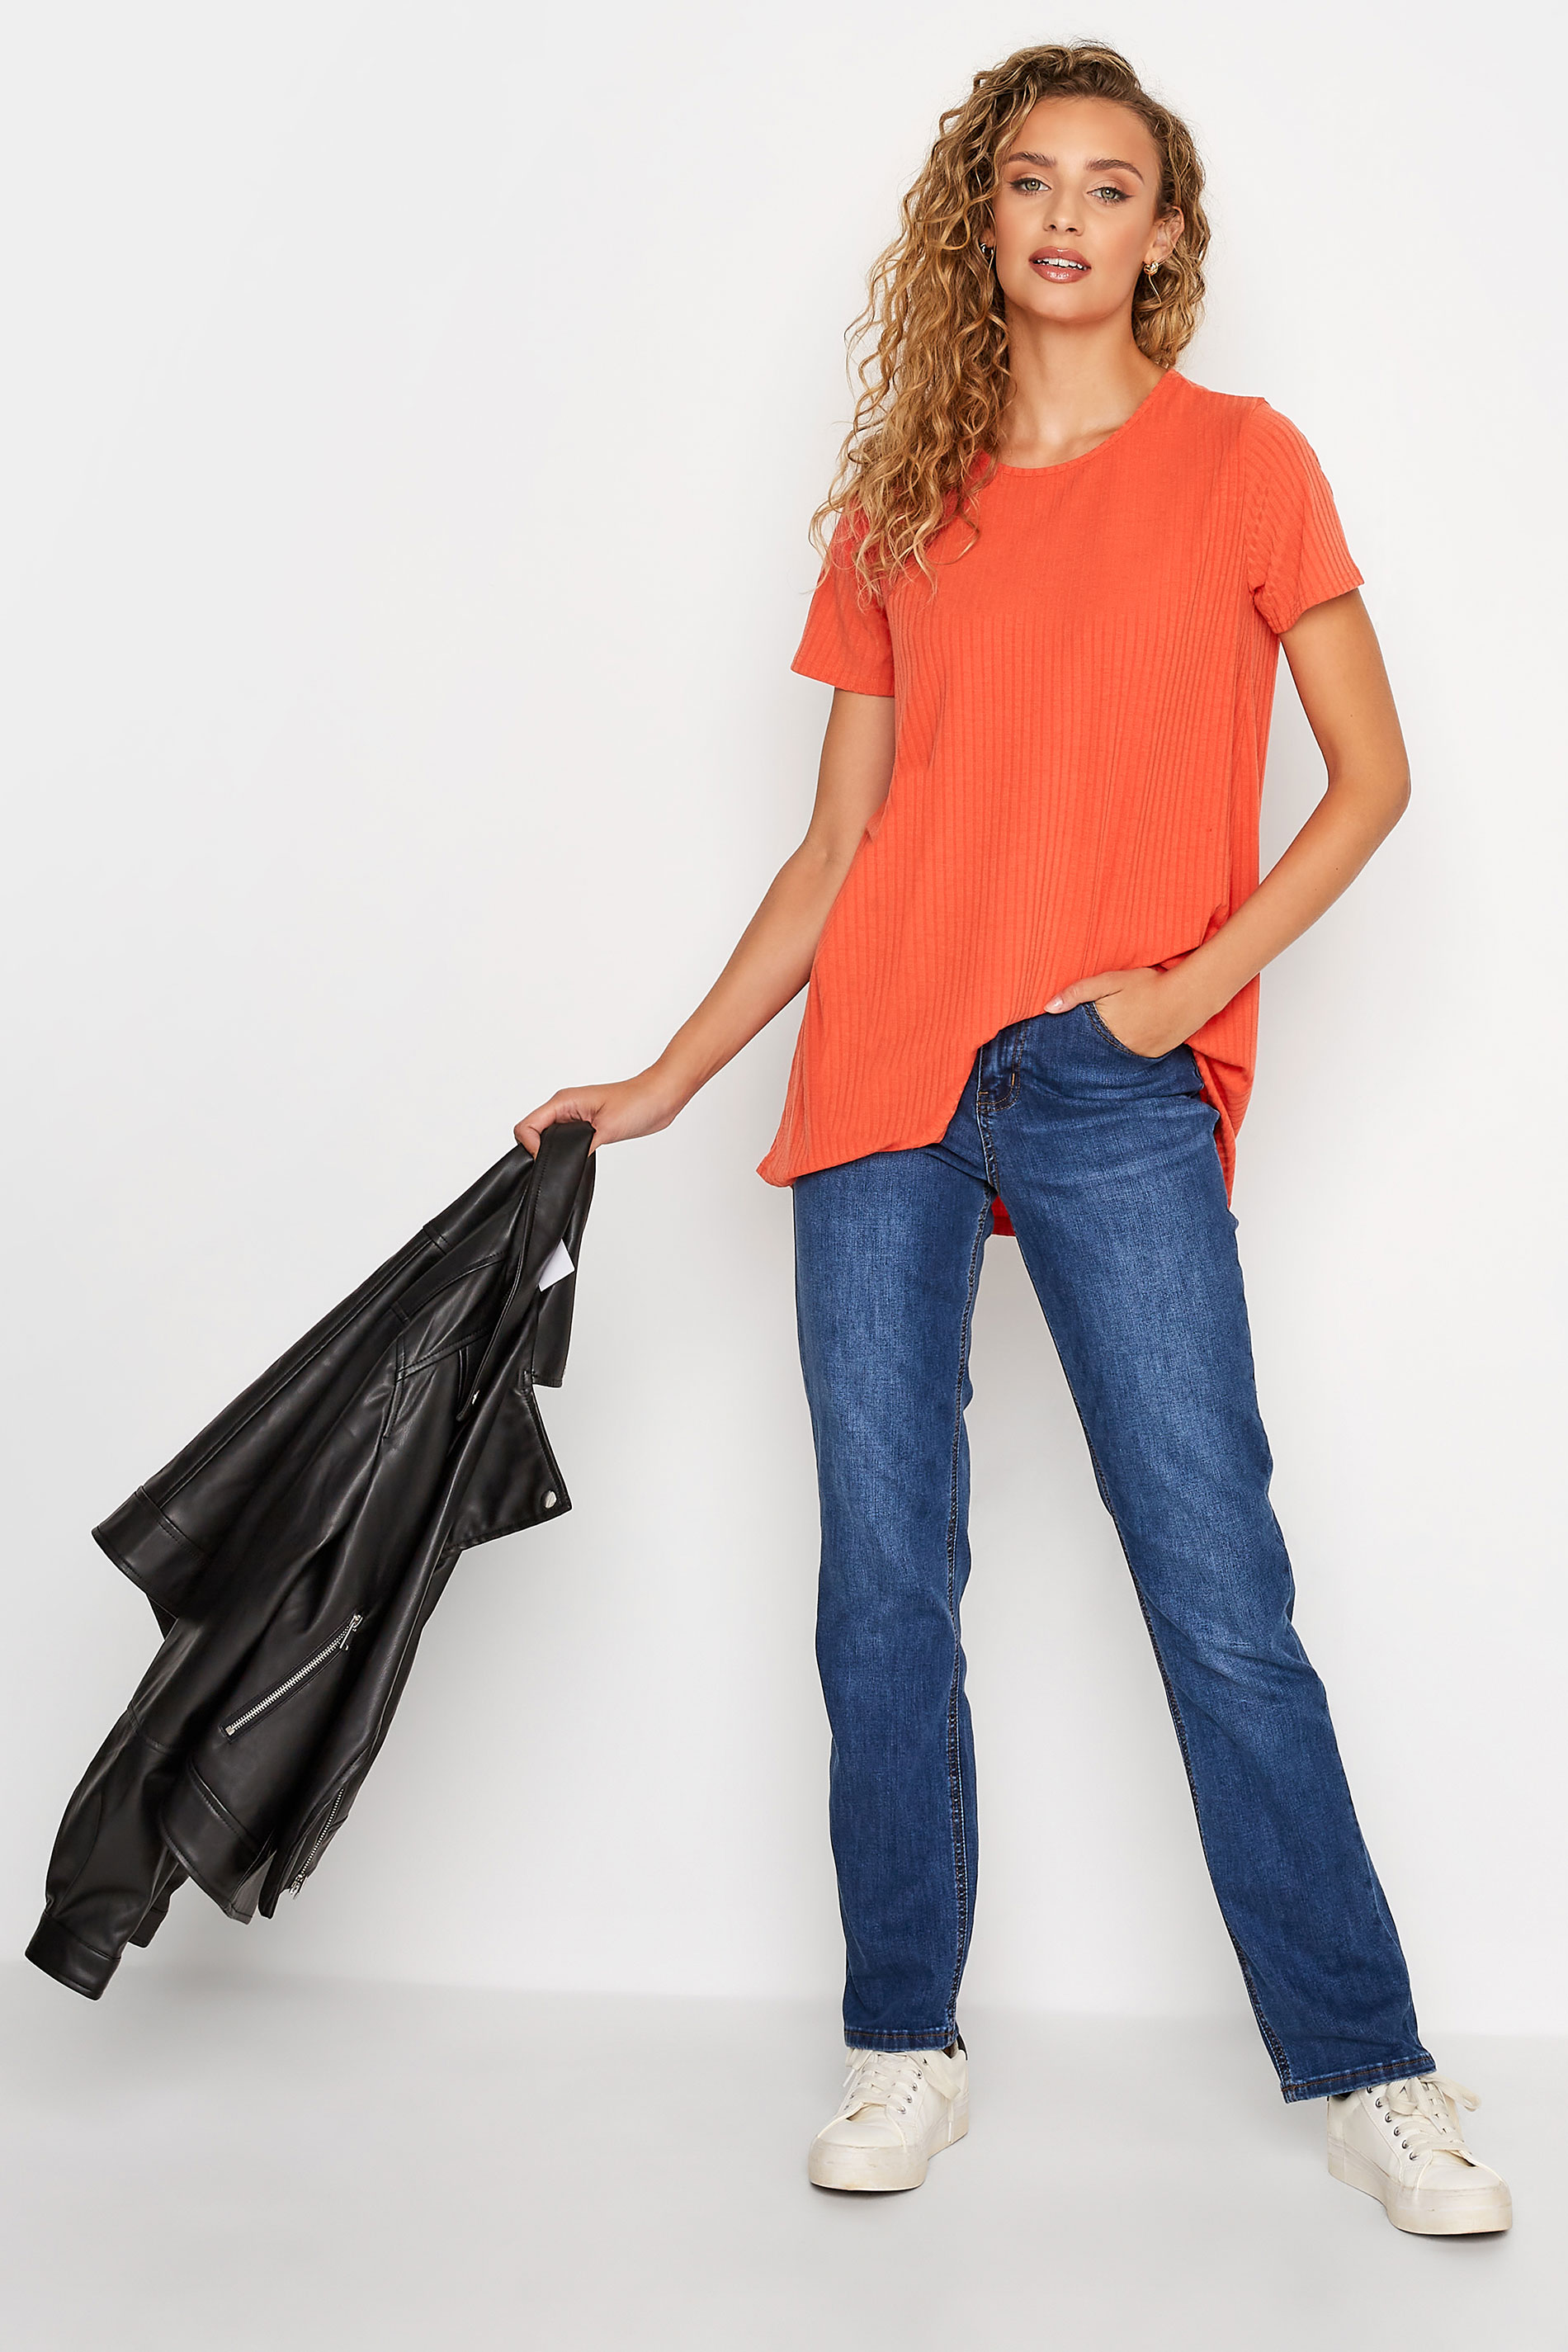 LTS Orange Swing T-Shirt | Long Tall Sally  2